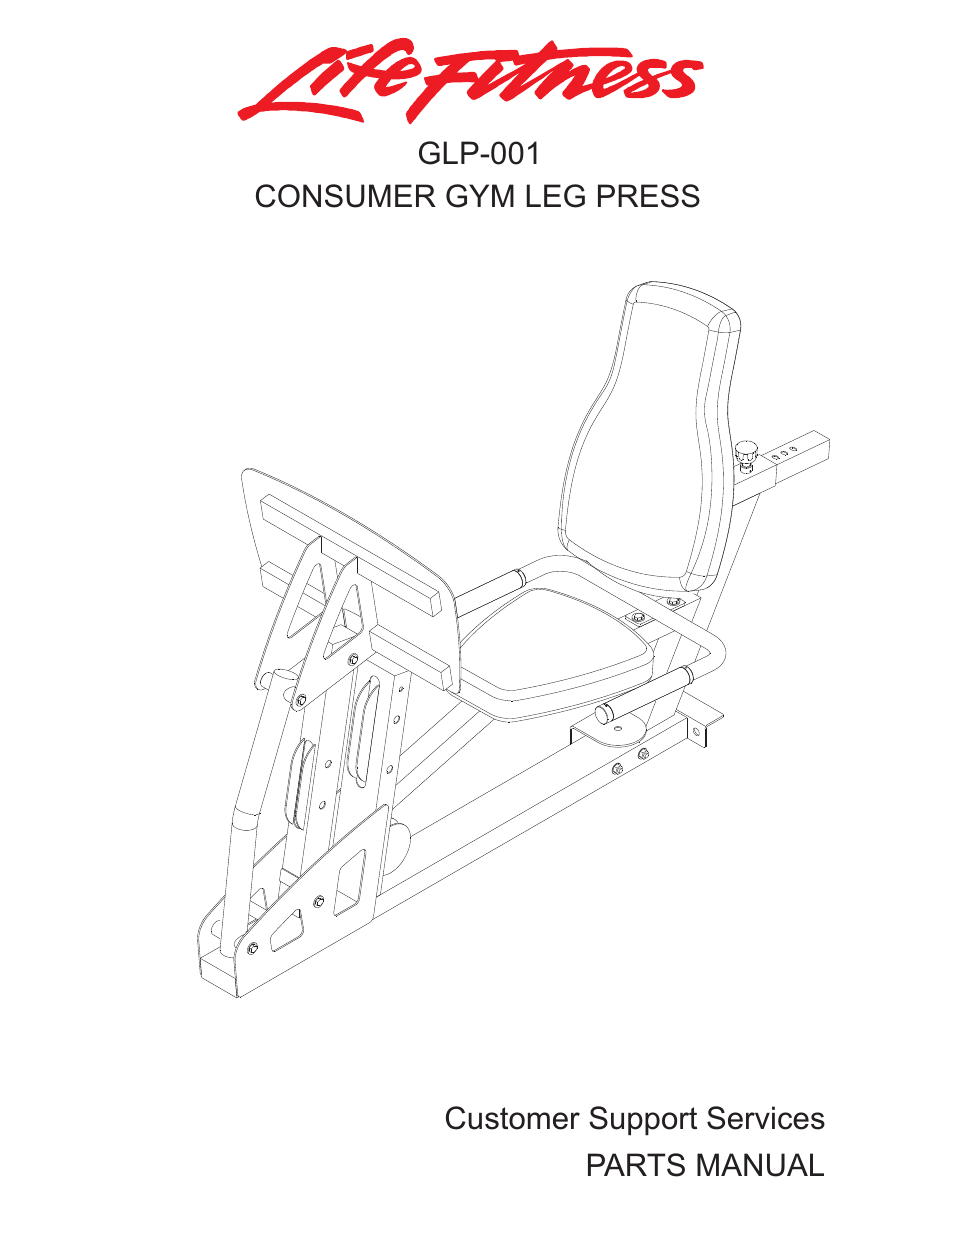 Consumer Gym Leg Press GLP-001